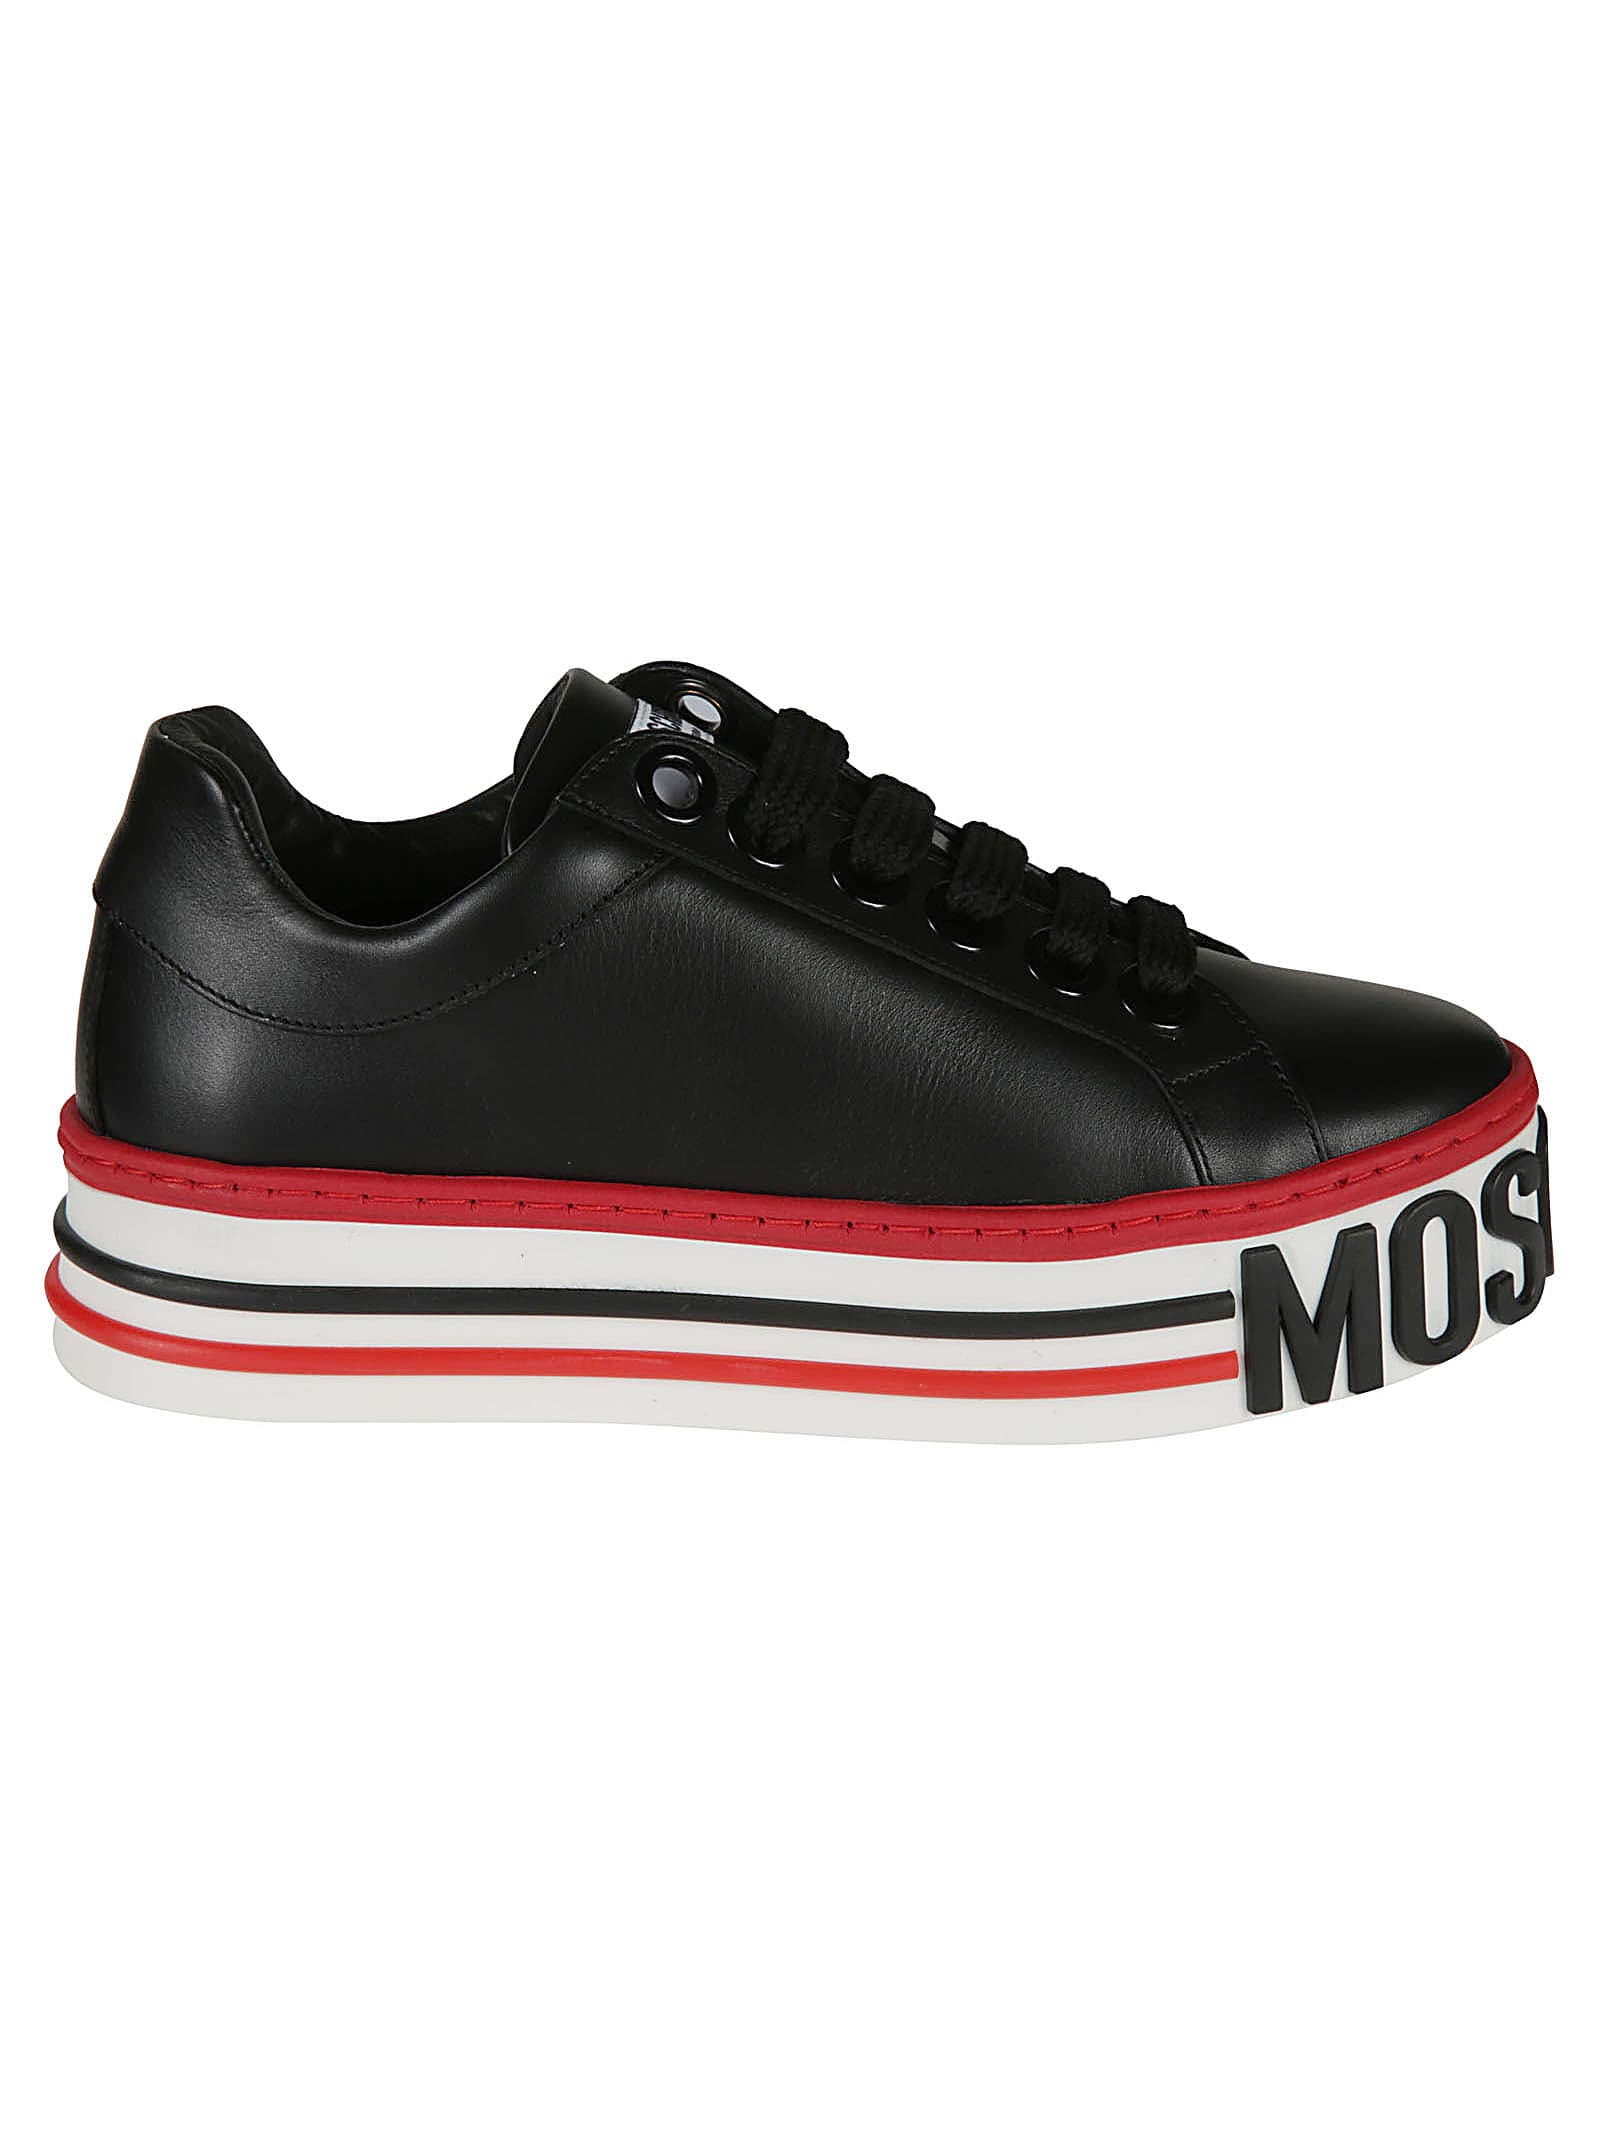 moschino platform shoes